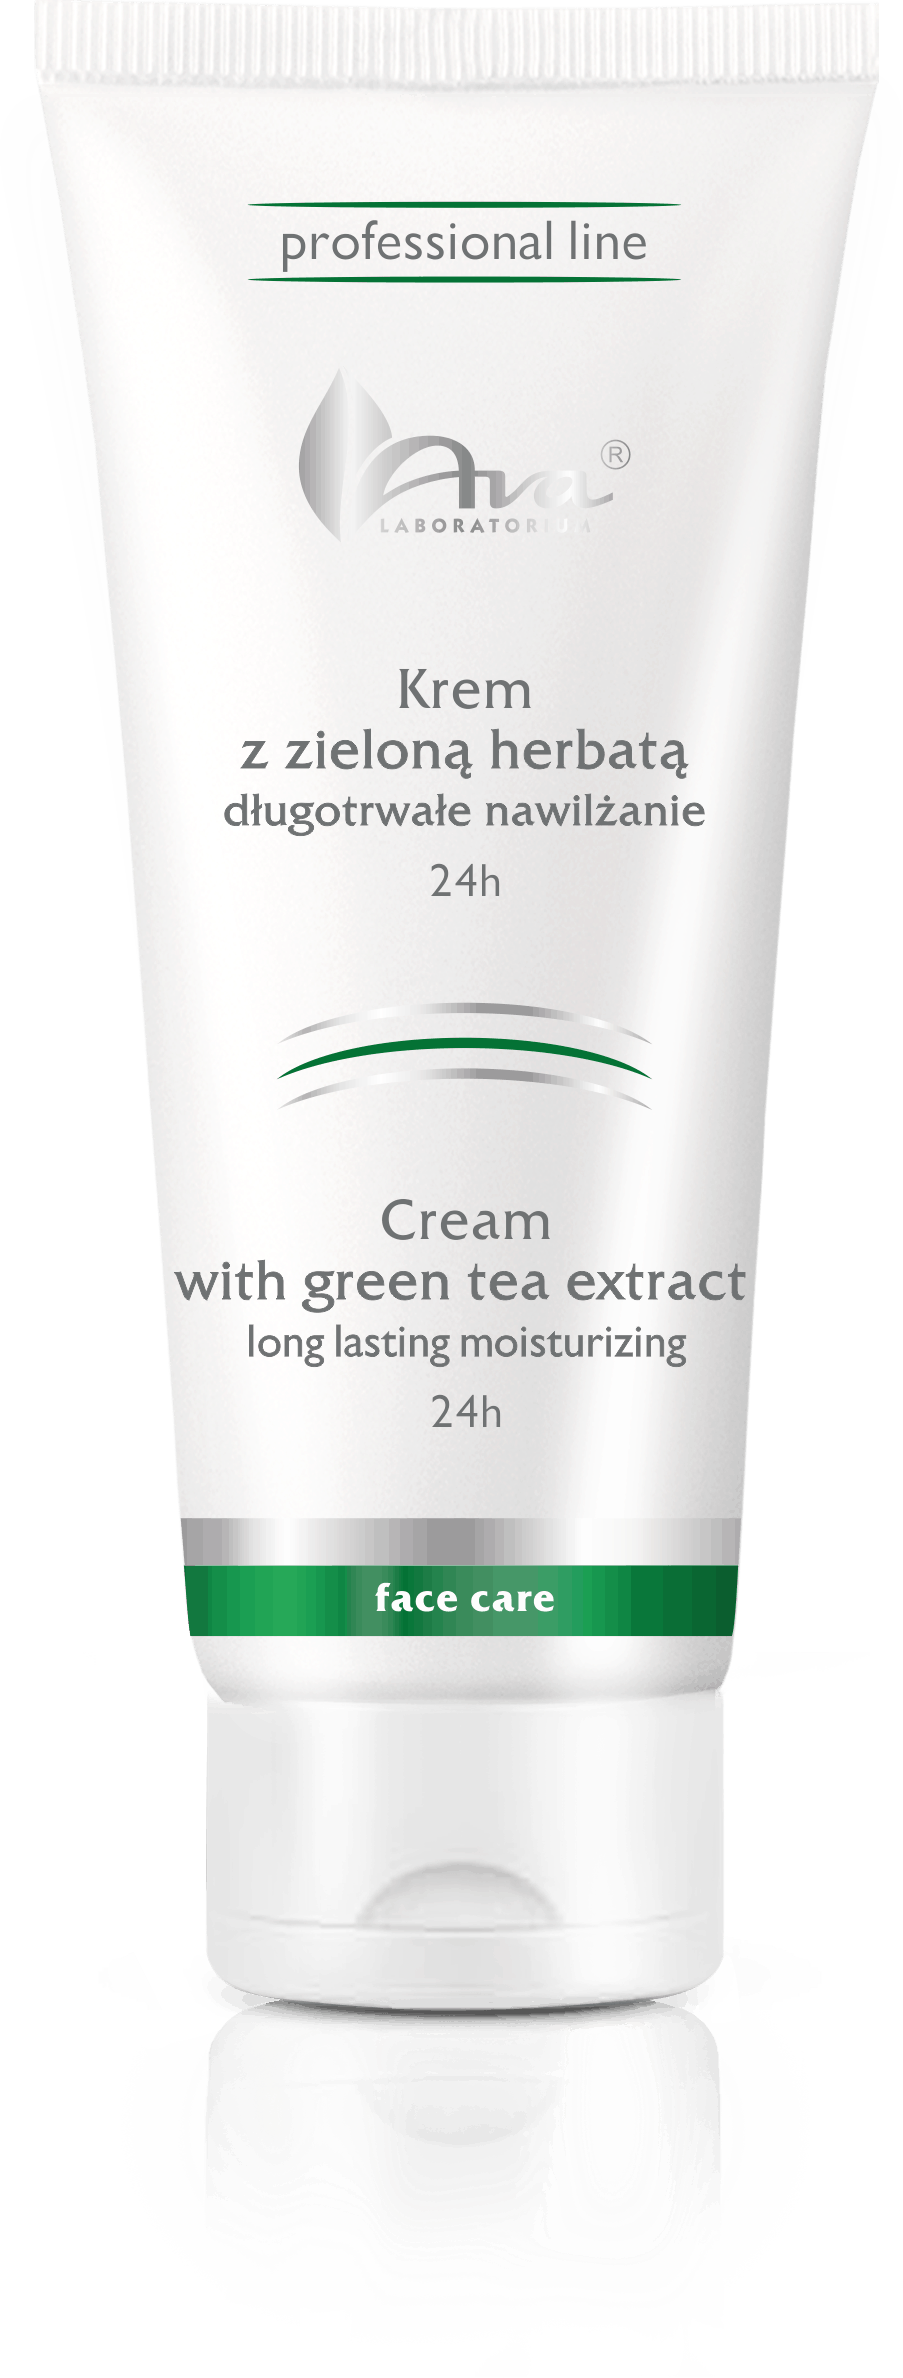 Long lasting moisturizing cream with Green Tea extract